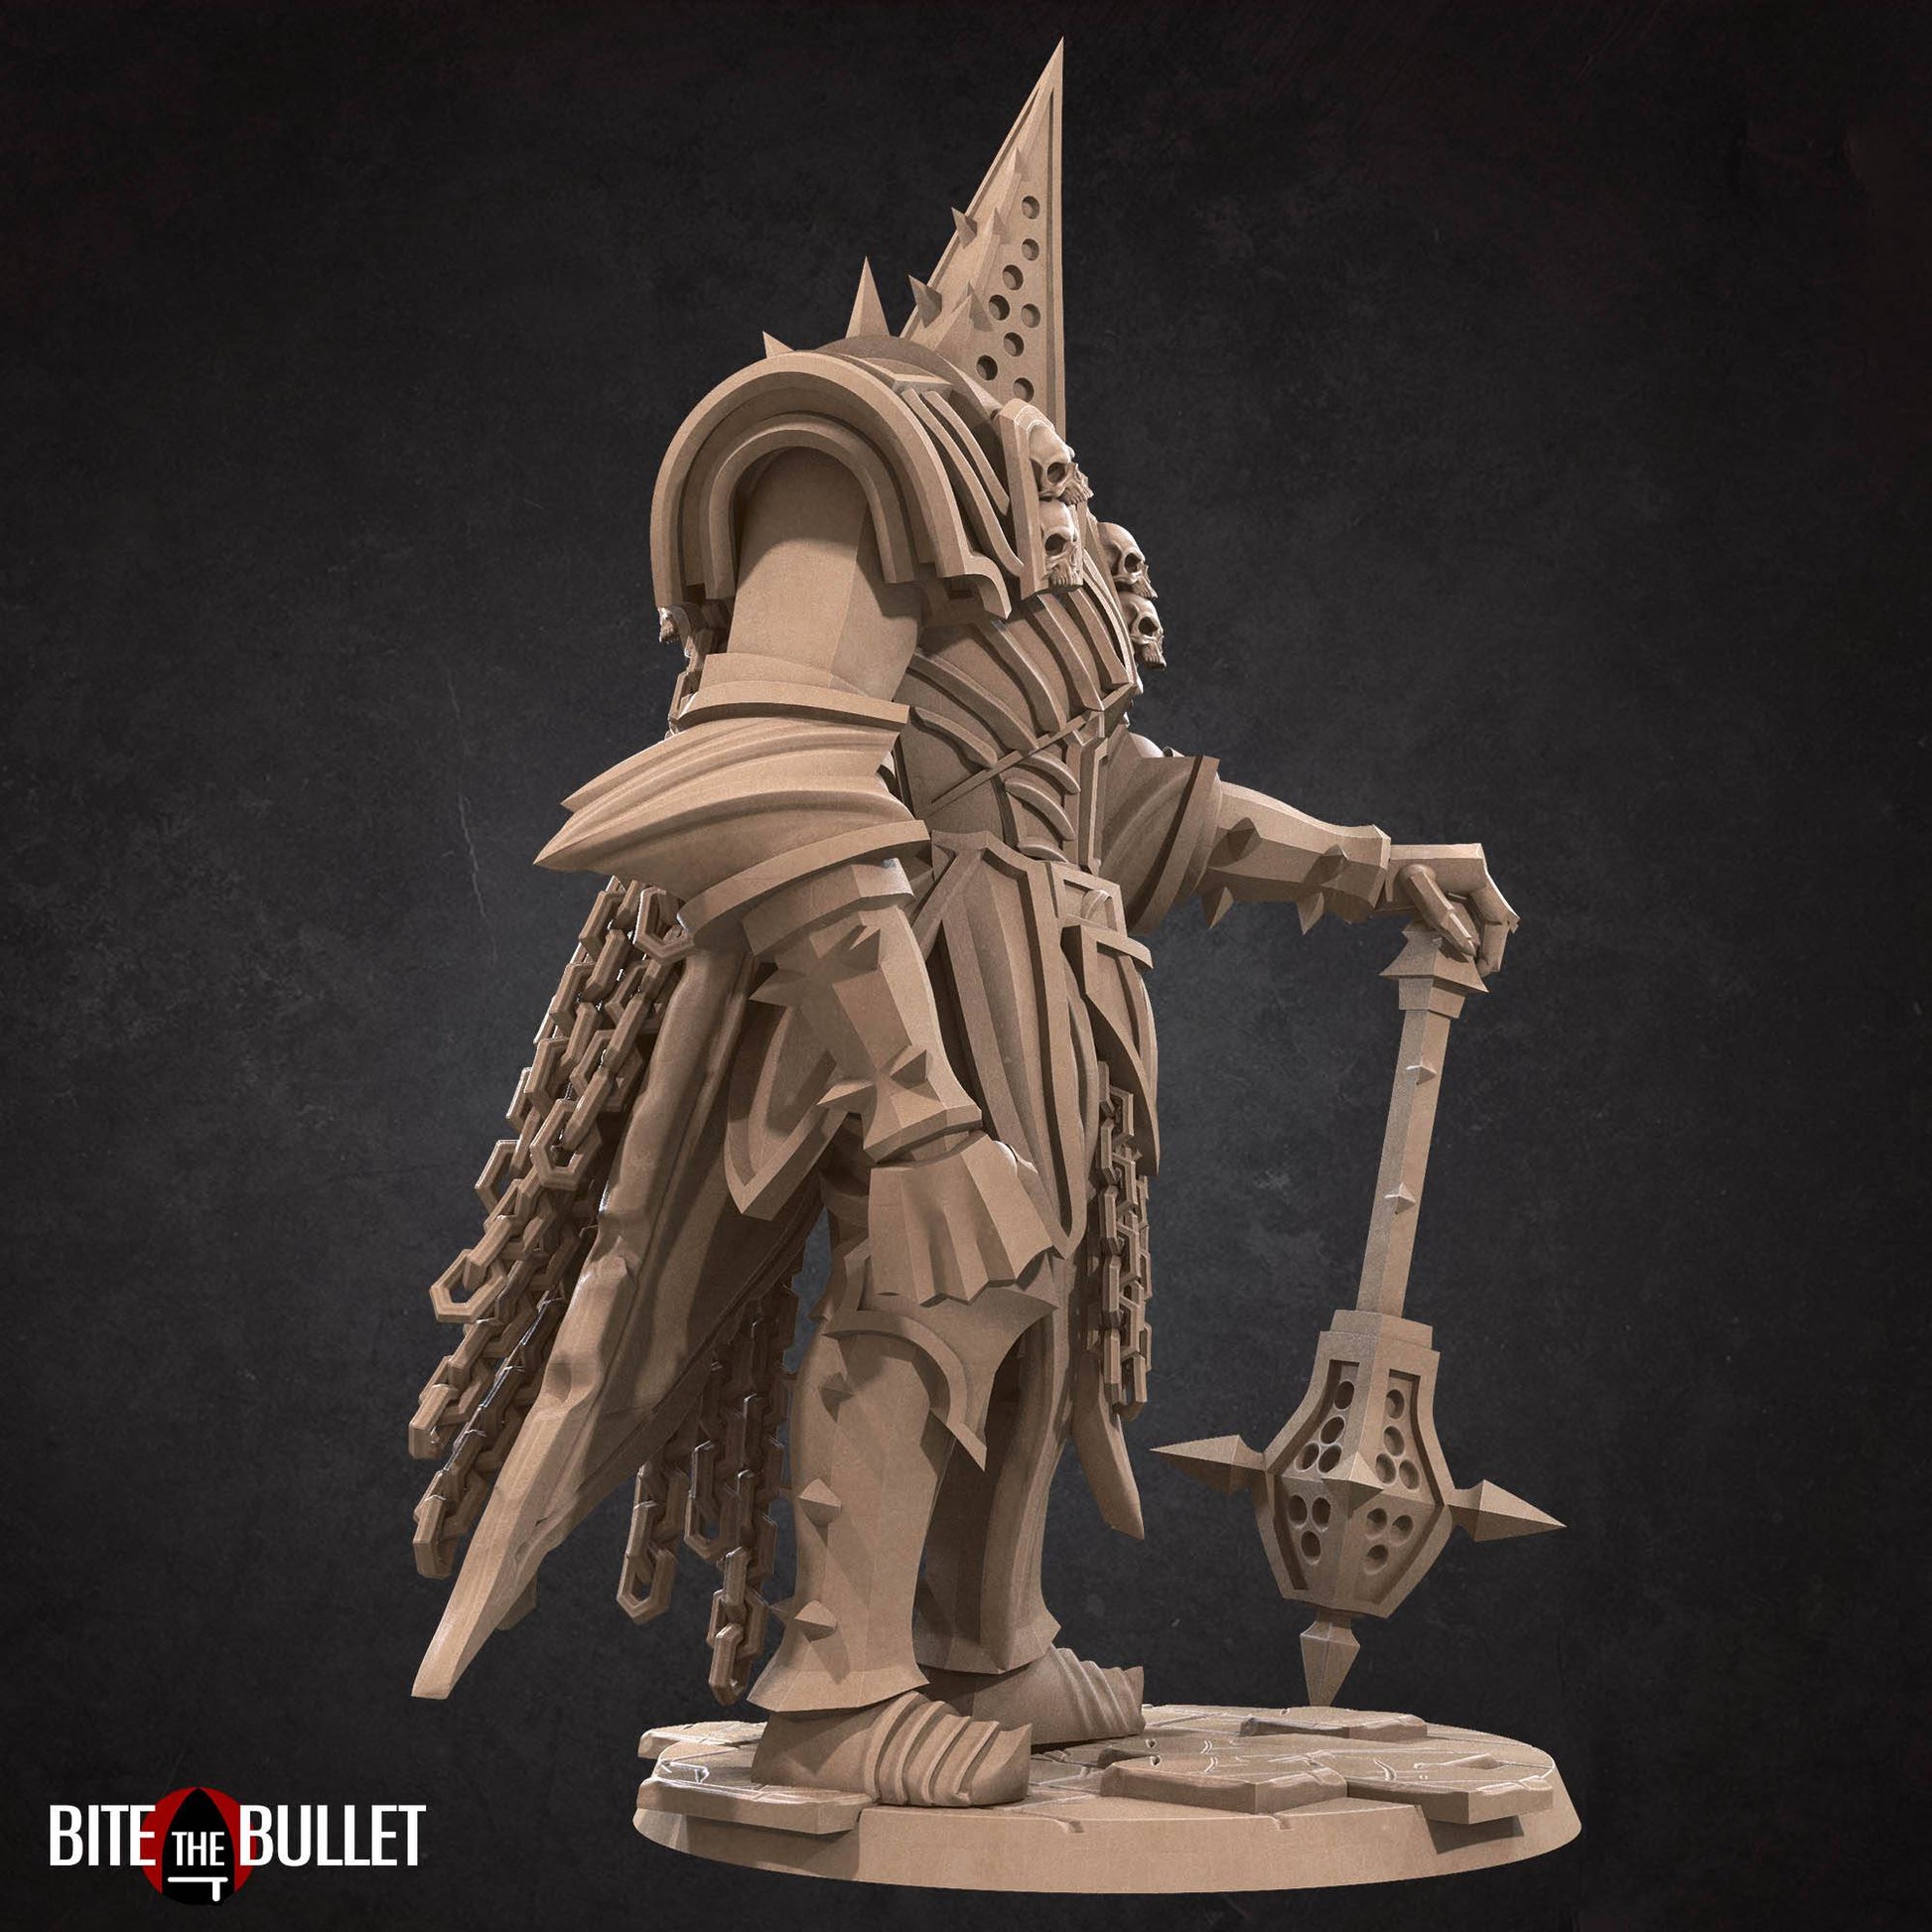 Penitent Knight | D&D Miniature TTRPG Character | Bite the Bullet - Tattles Told 3D